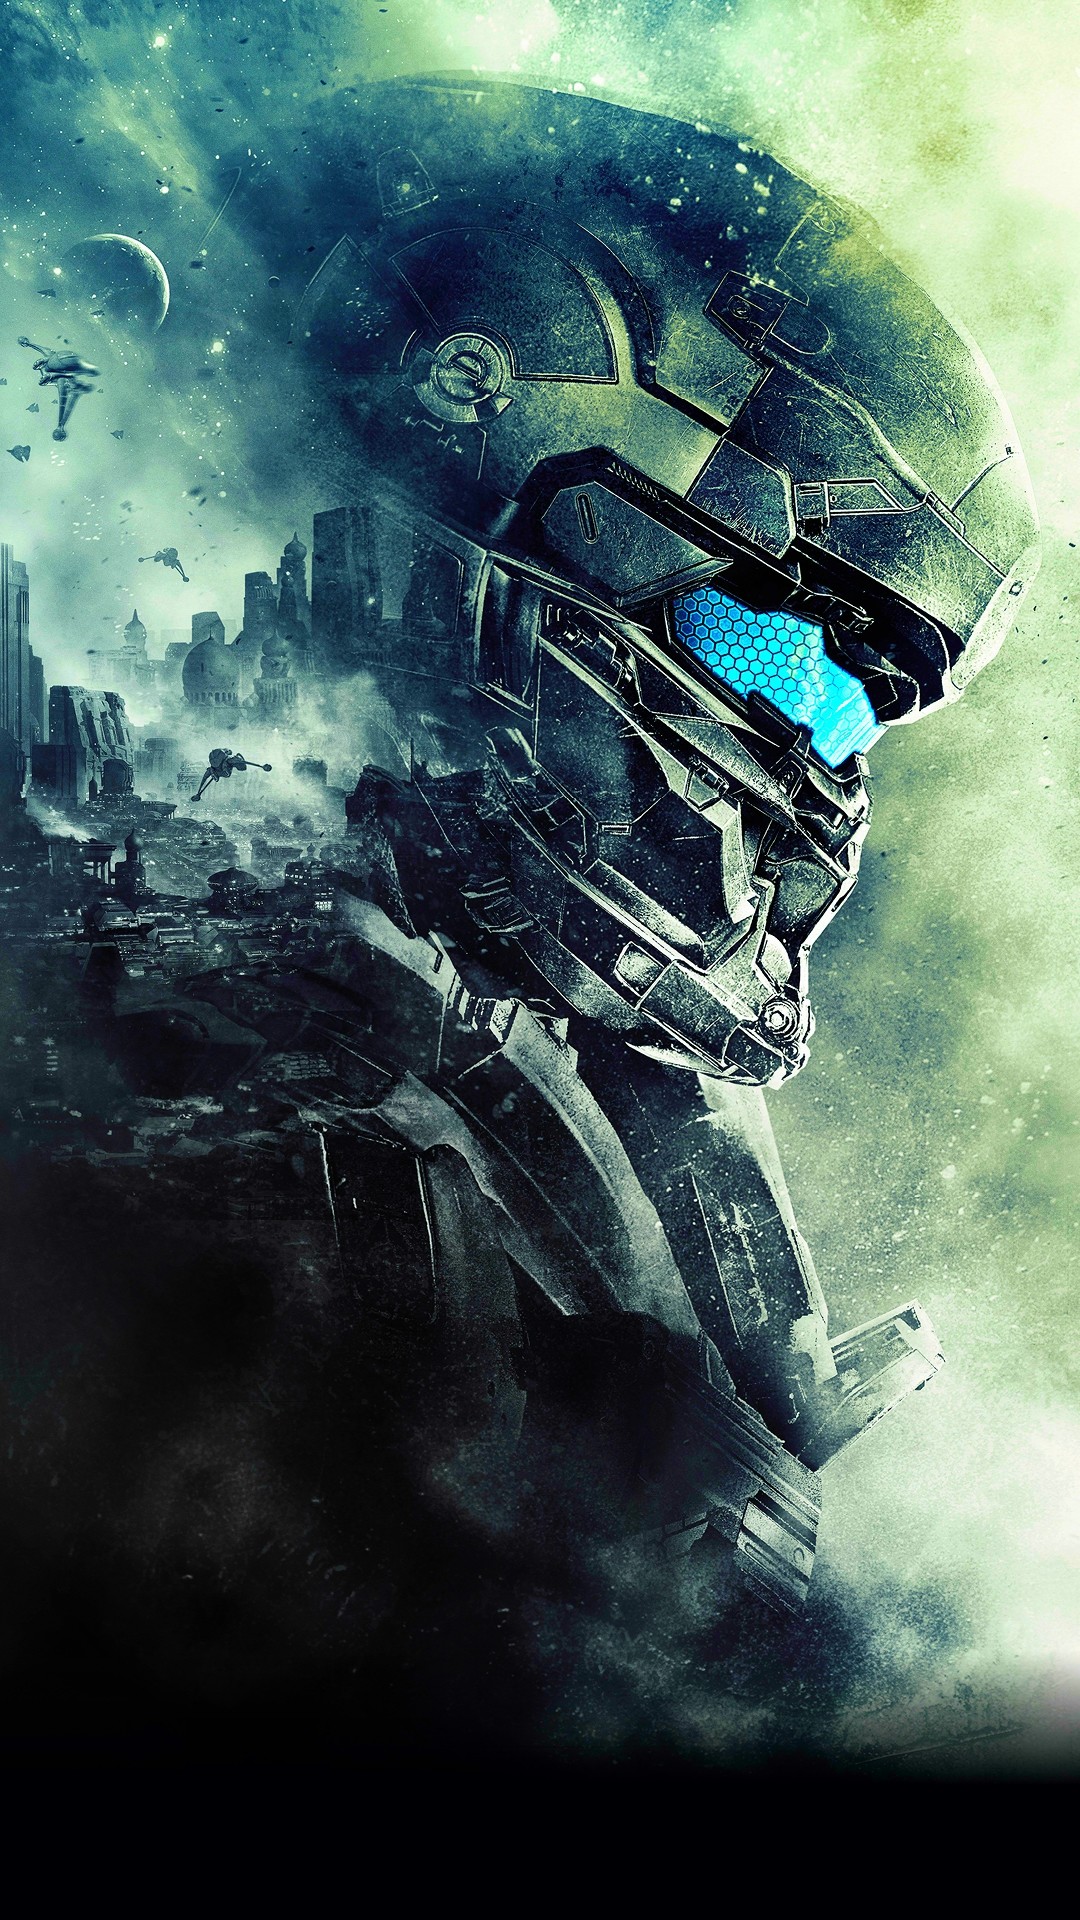 Halo 5 spartan locke Tumblr